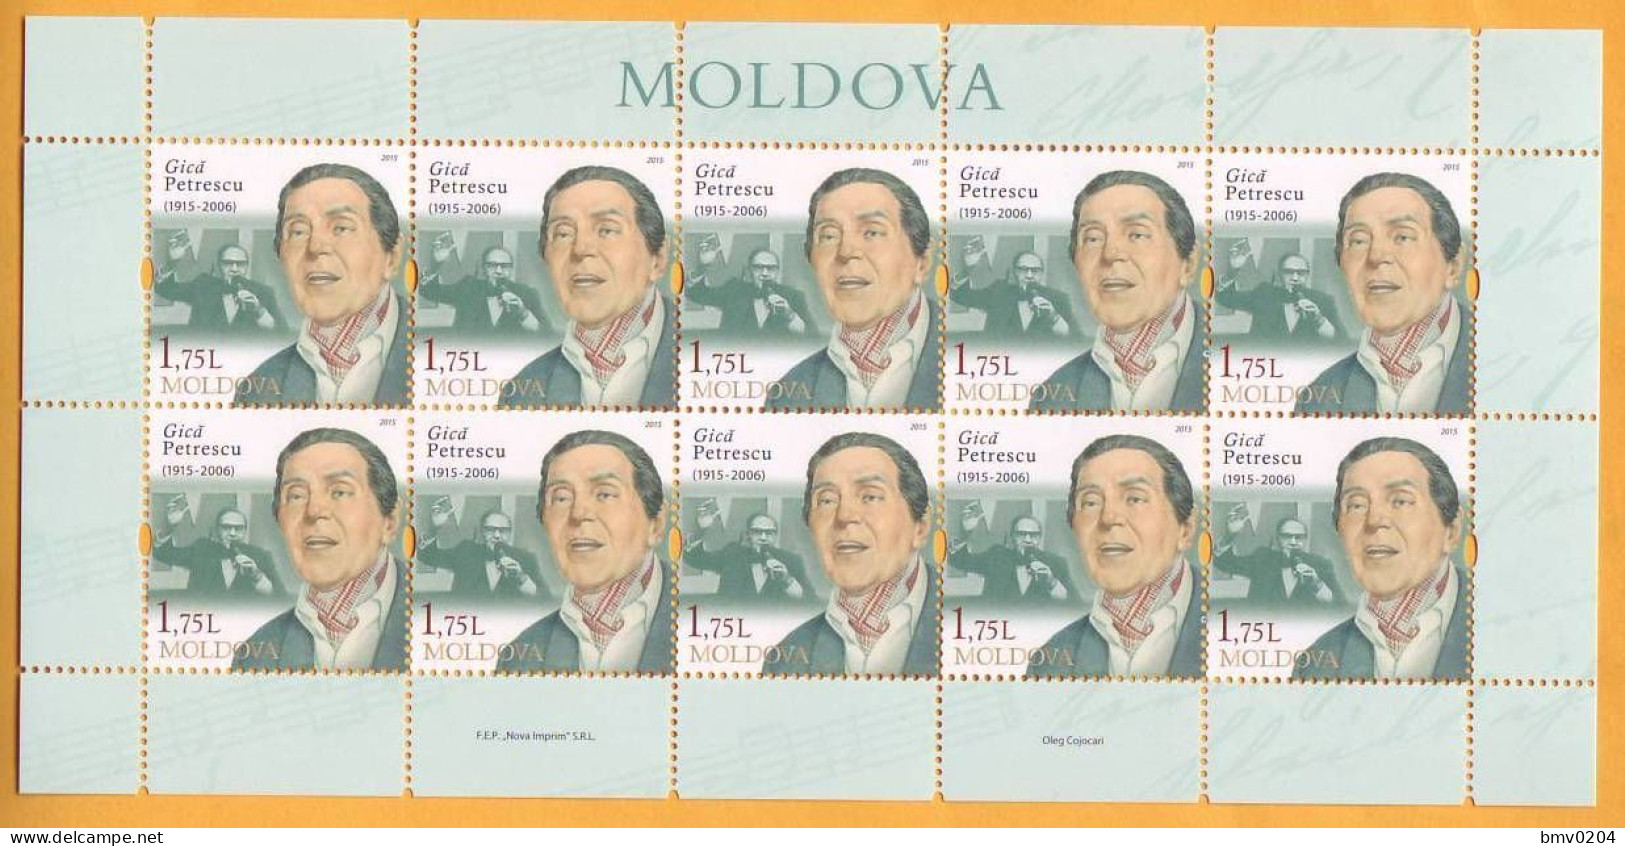 2015 Moldova Moldavie Moldau Sheet Romania  Gicu Petrescu  Mint 1.75 - Moldavia